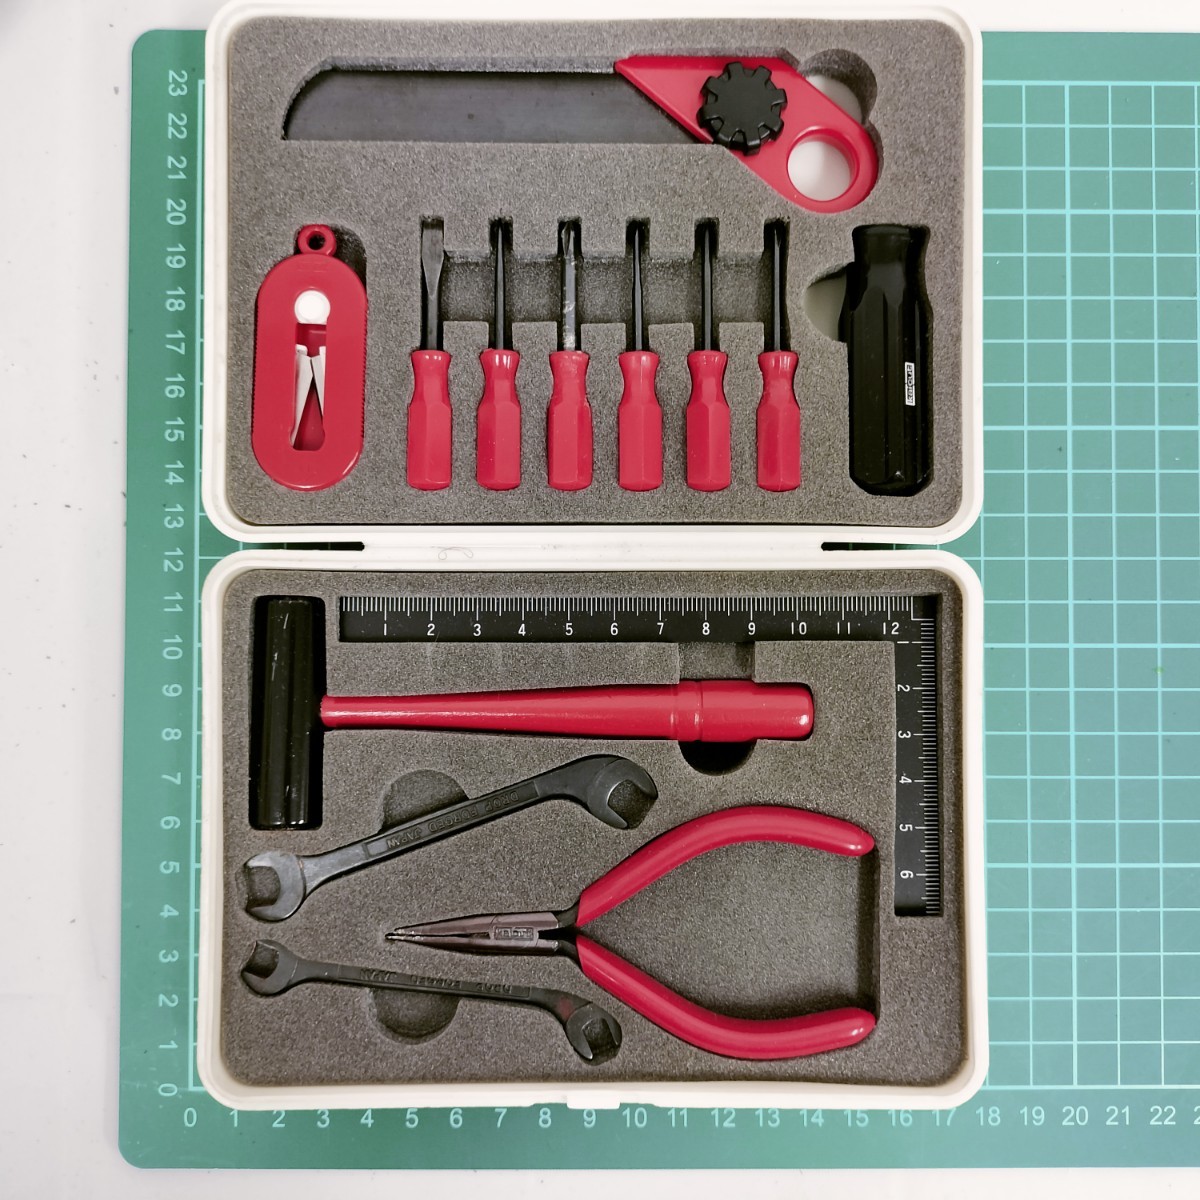 [USED]kai cut. seal cutlery hobby staff TW-510 Mini tool set tool DIY construction carrying ton kachi tongs saw Driver pincers 